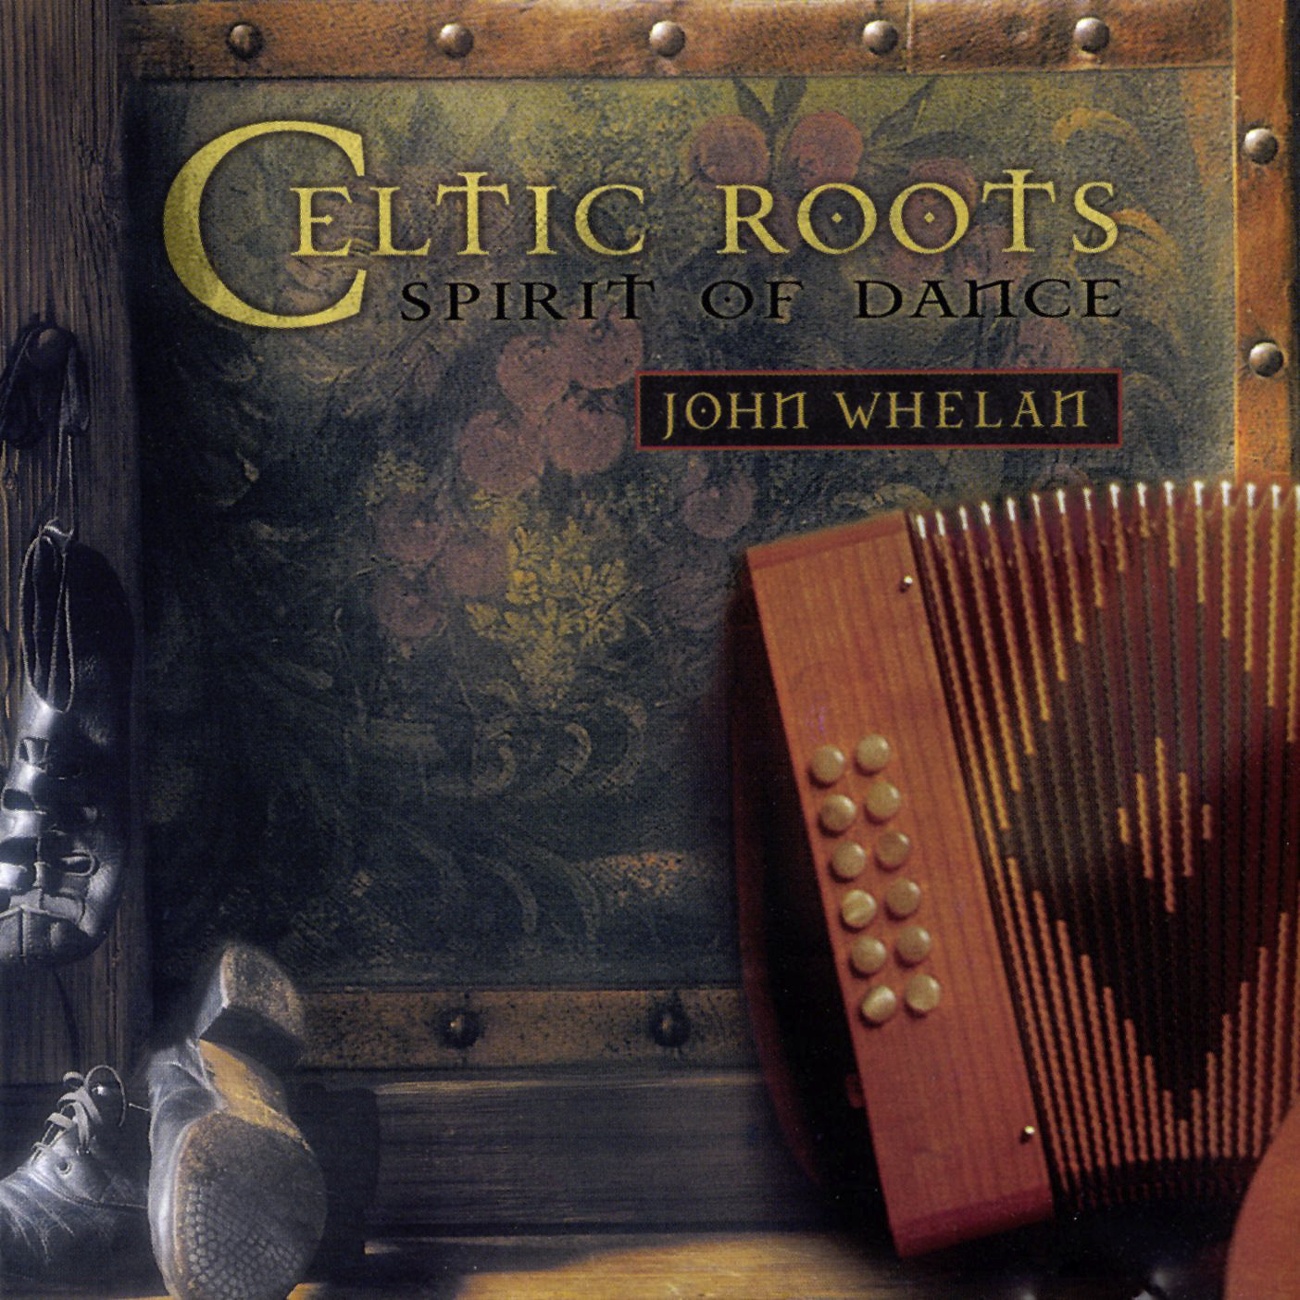 Celtic Roots (Spirit Of Dance)